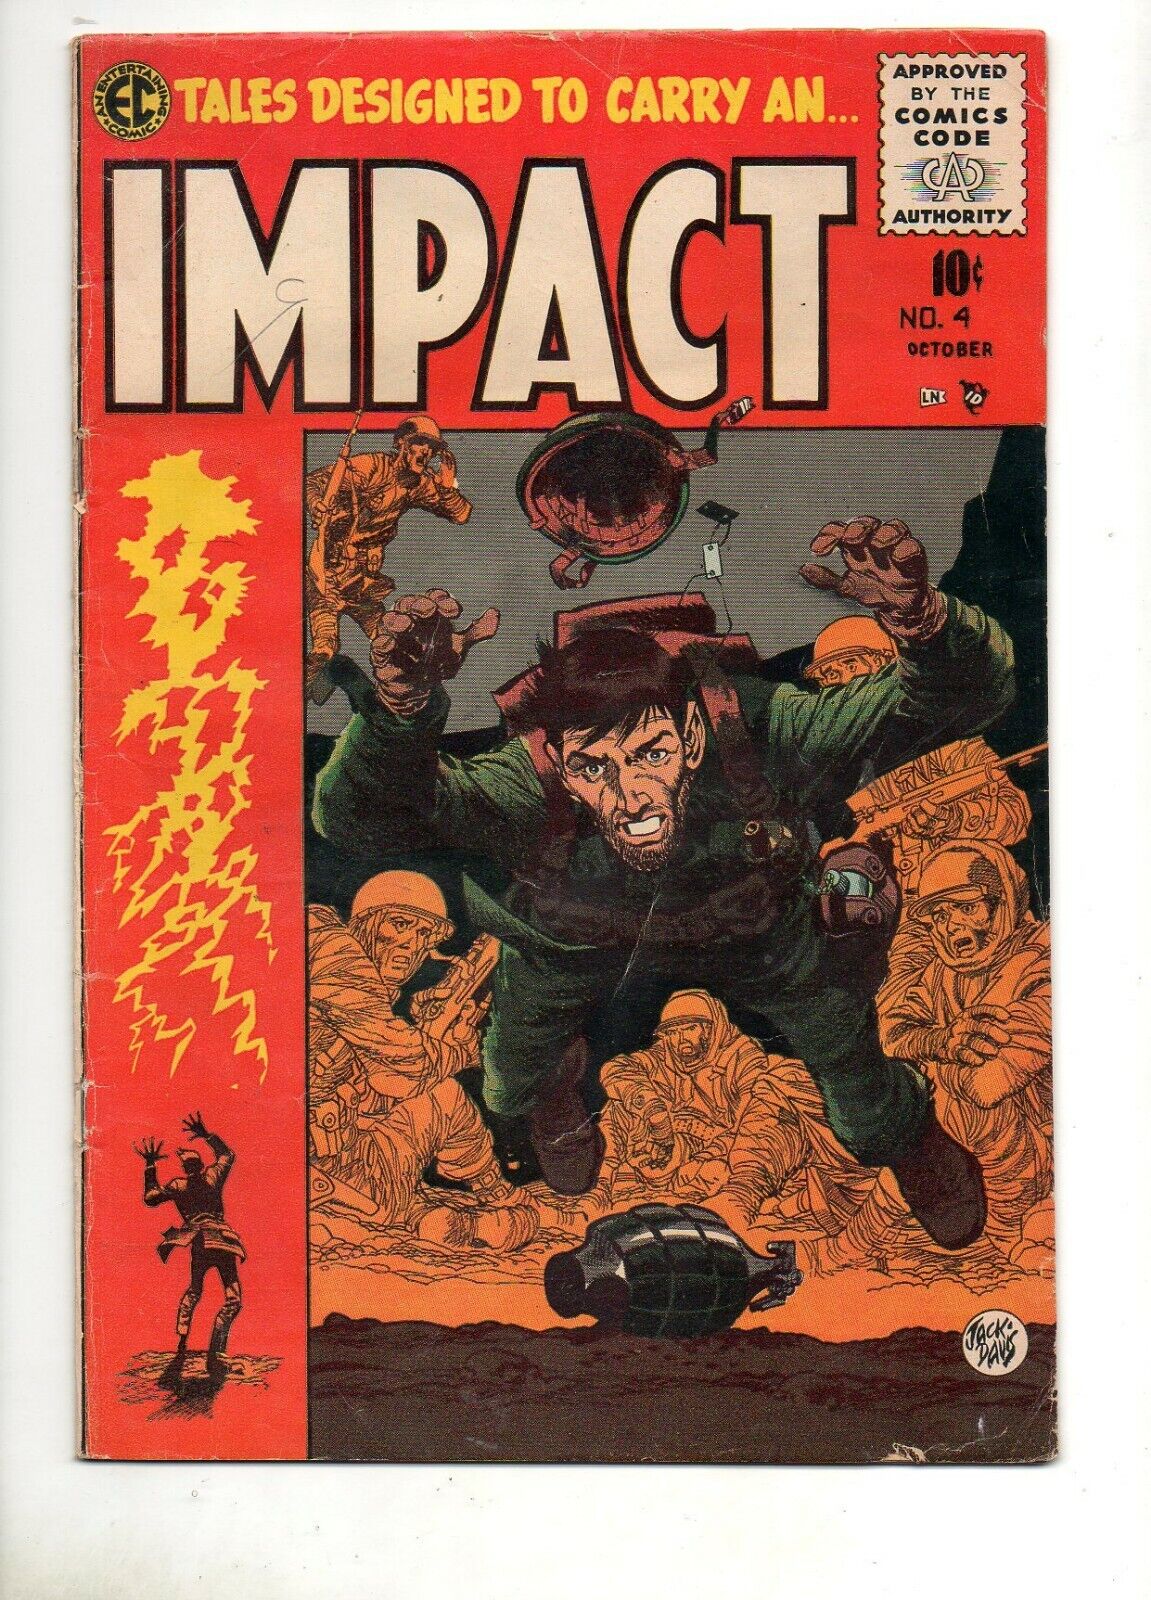 Impact #4 EC 1955 Fn+ 6.5 DAVIS COVER/ART EVANS, CRANDALL, & INGELS ART NICE